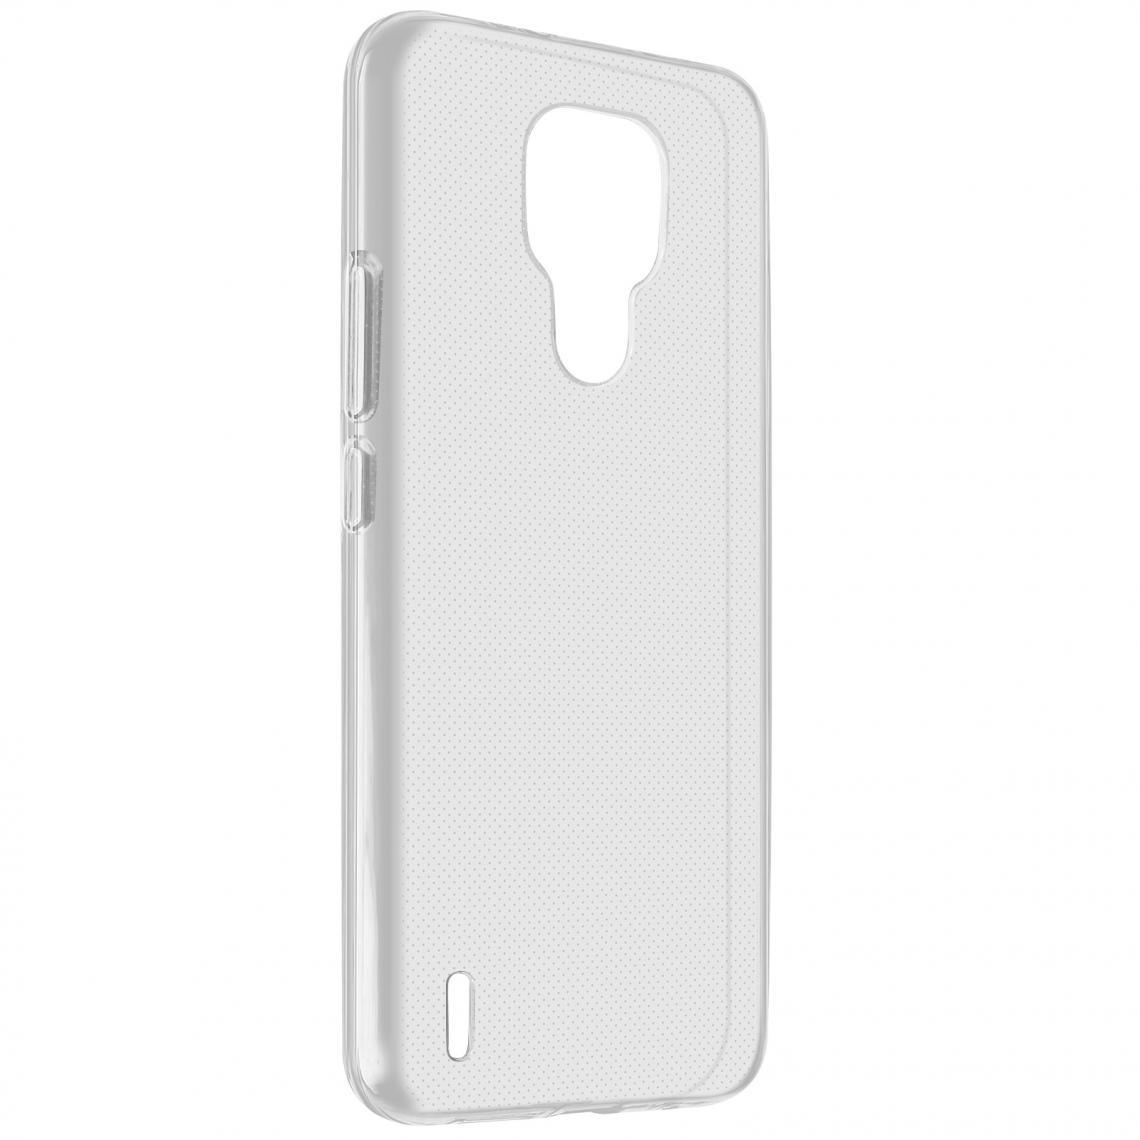 Avizar - Coque Motorola E7 Protection Silicone Souple Ultra-Fin Transparent - Coque, étui smartphone